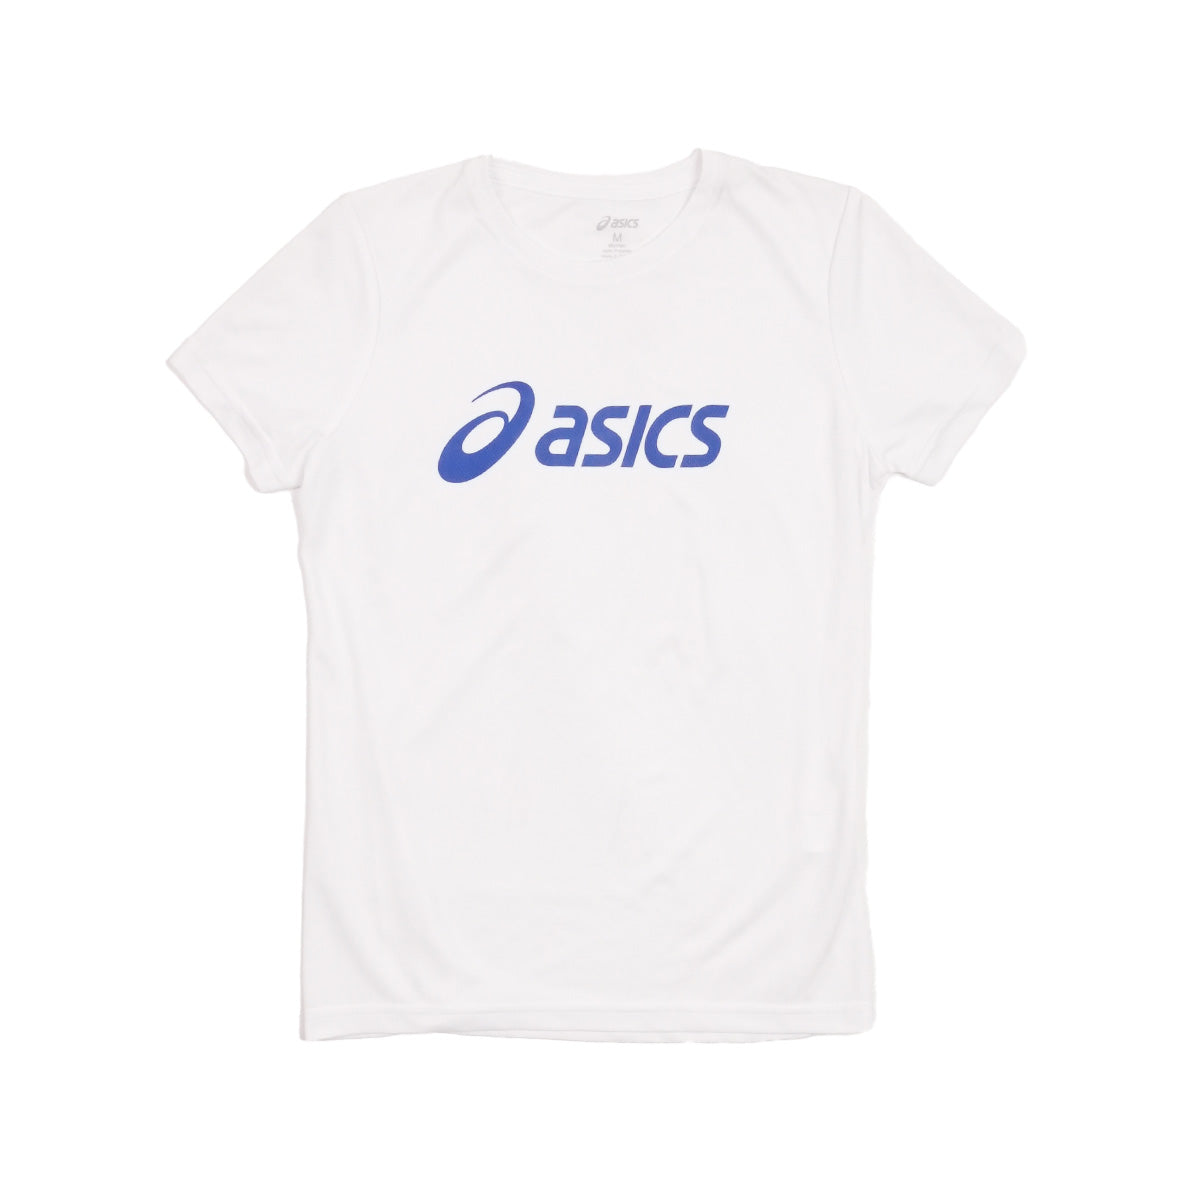 Asics Logo Running Shirt Women חולצה לנשים אסיקס